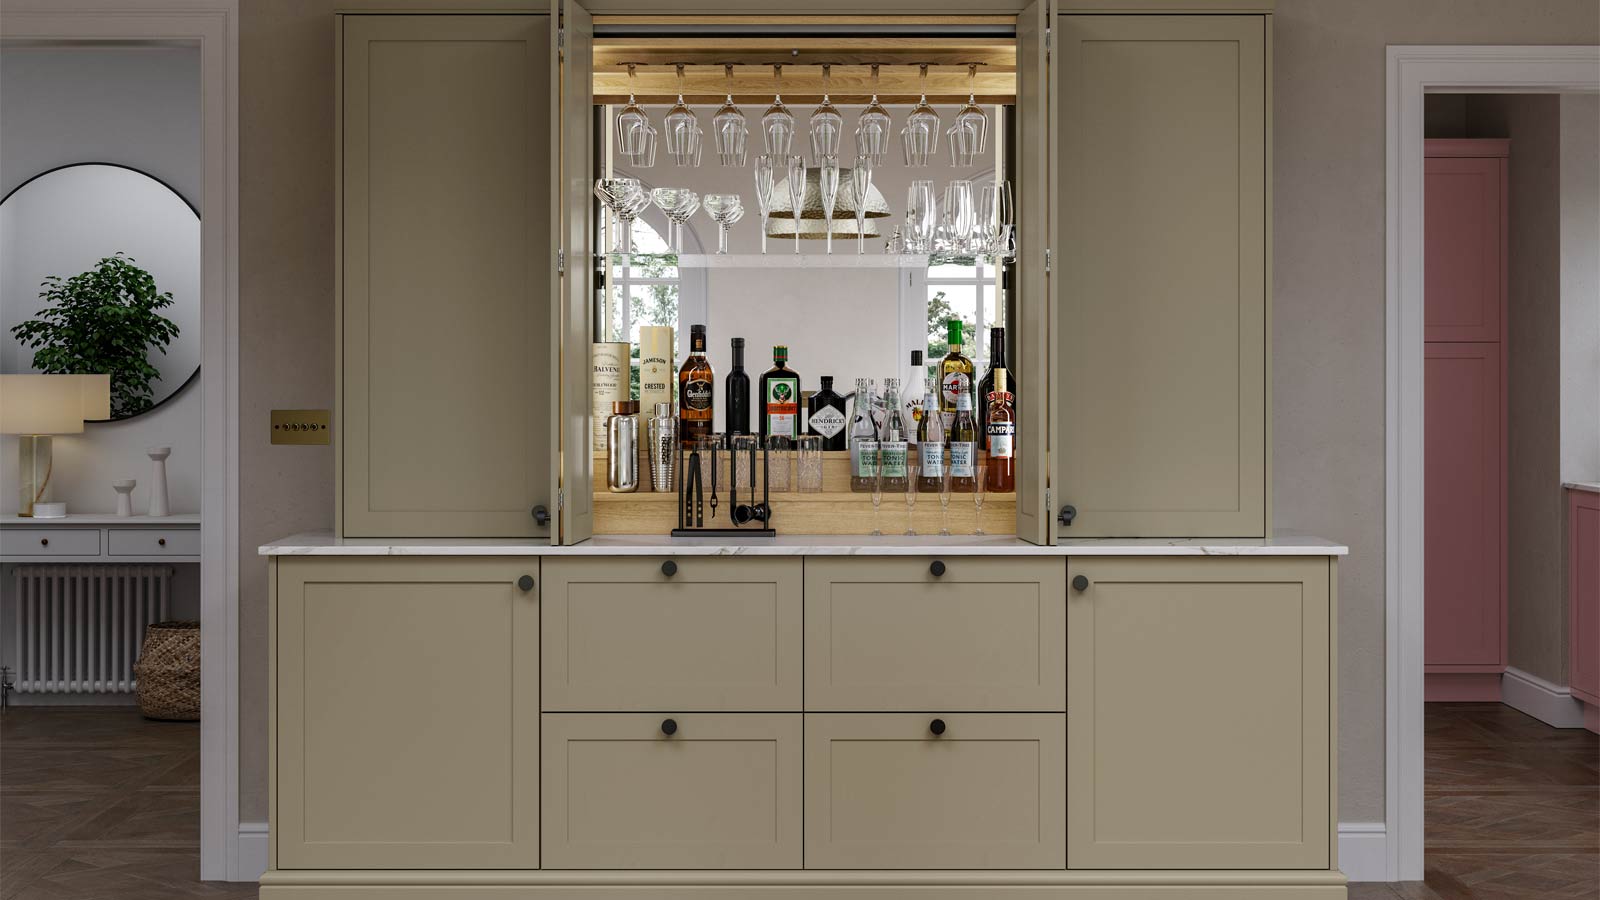 A kitchen dresser unit with a drinks shelf